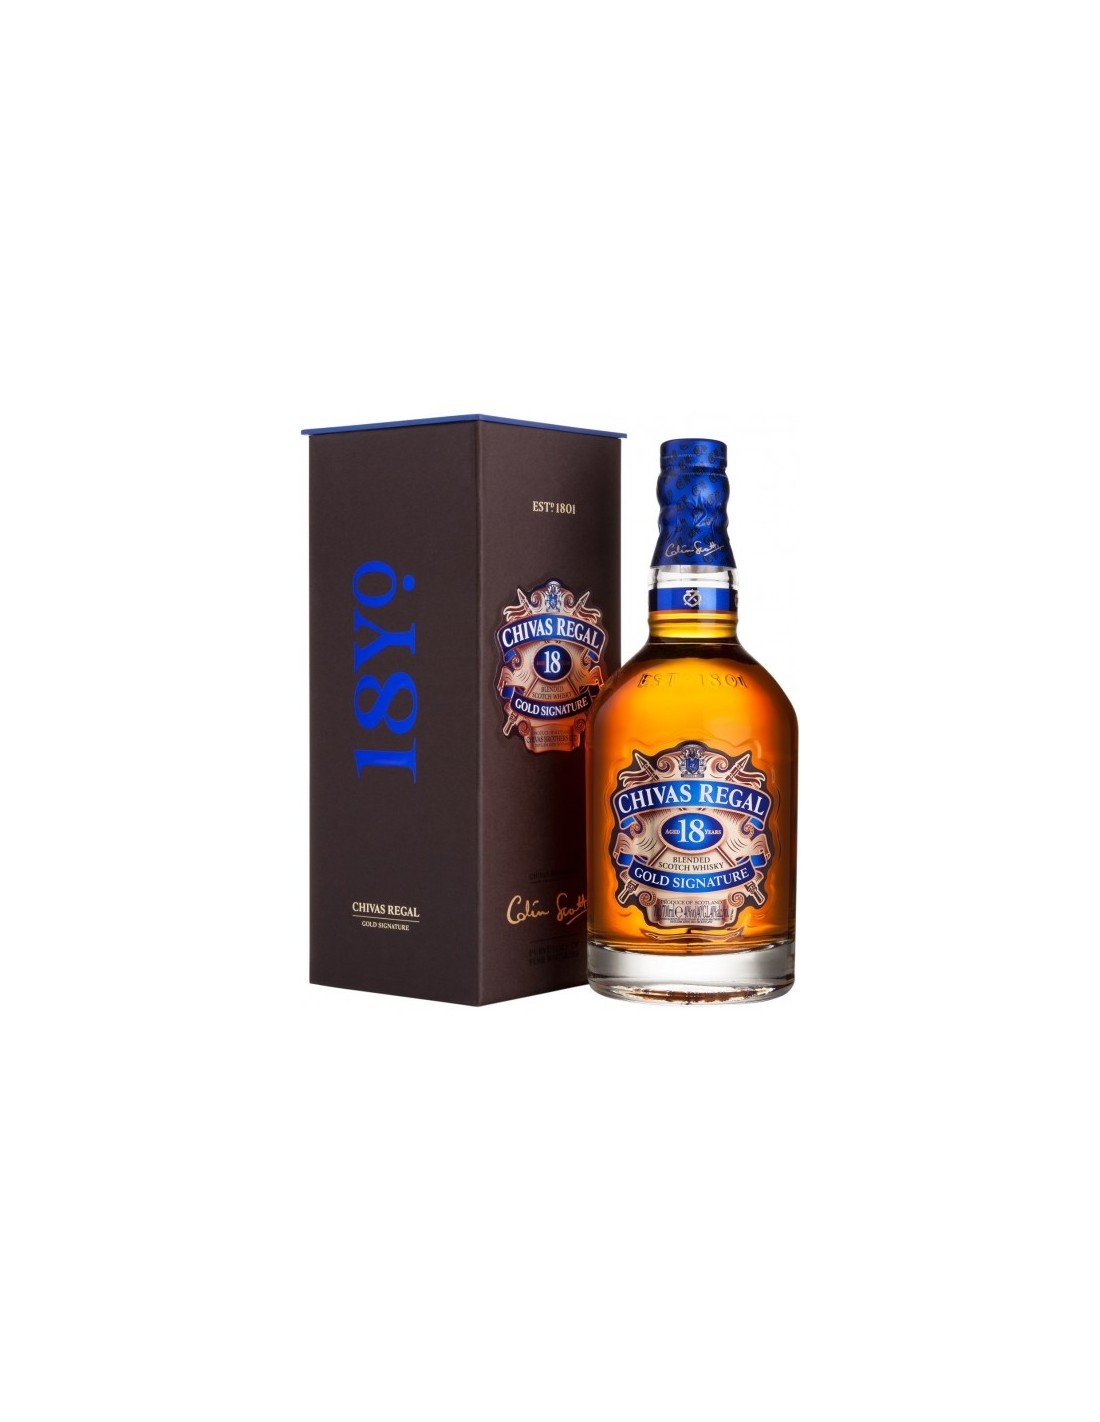 Whisky Chivas Regal 0.7L, 18 ani, 40% alc., Scotia alcooldiscount.ro